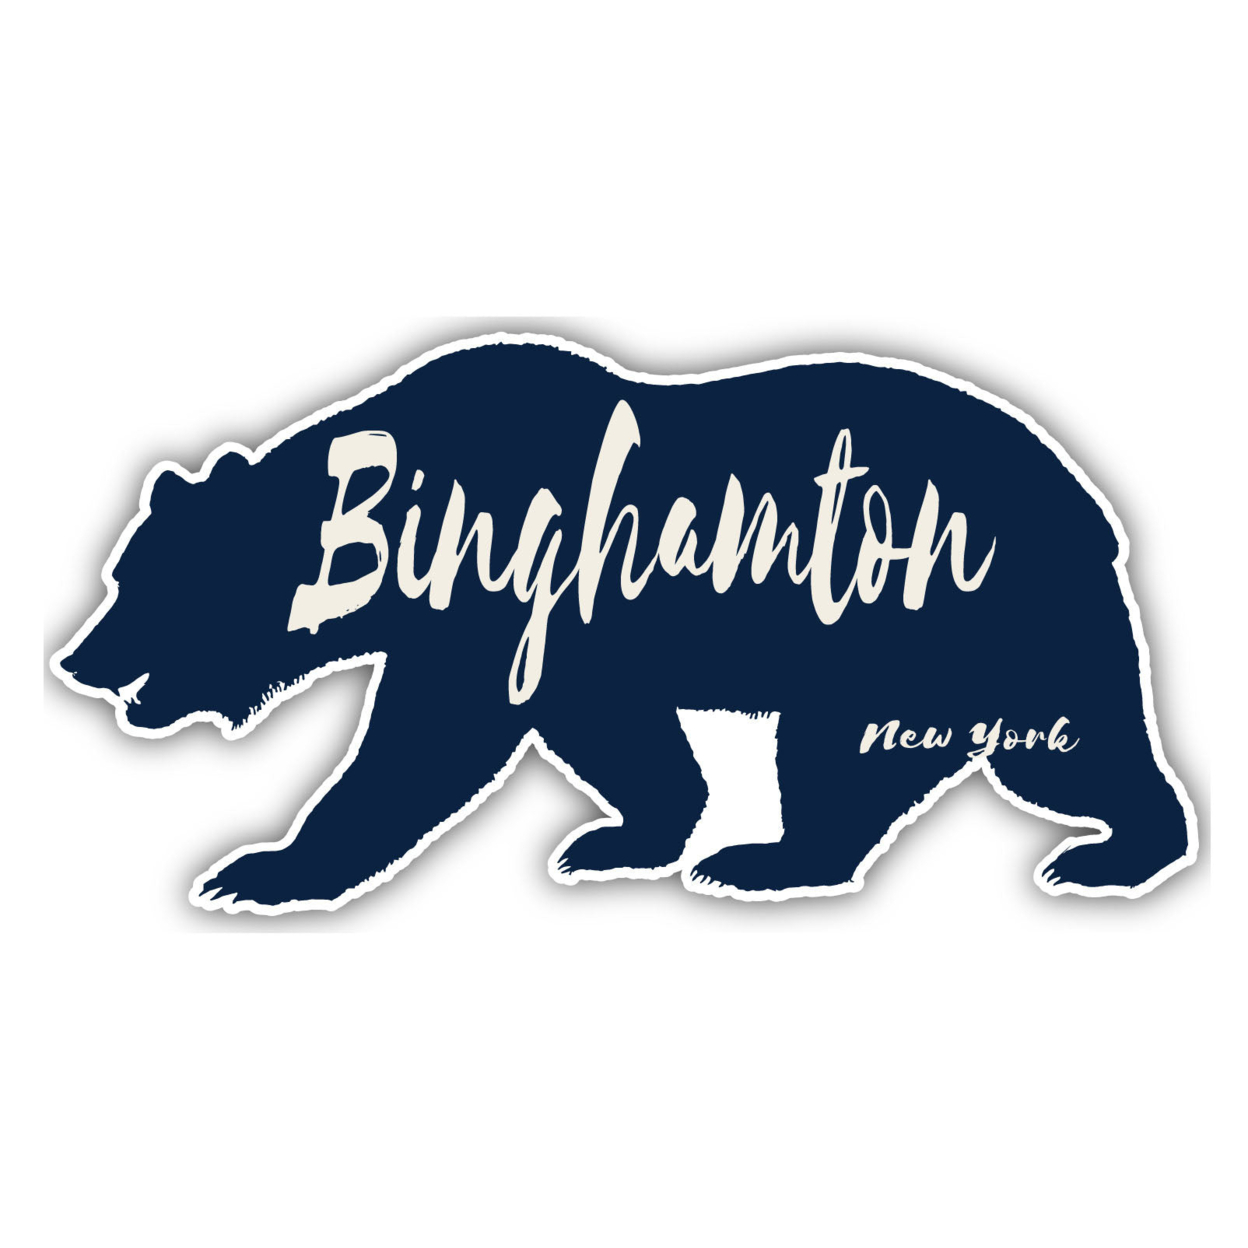 Binghamton New York Souvenir Decorative Stickers (Choose Theme And Size) - 4-Pack, 8-Inch, Bear